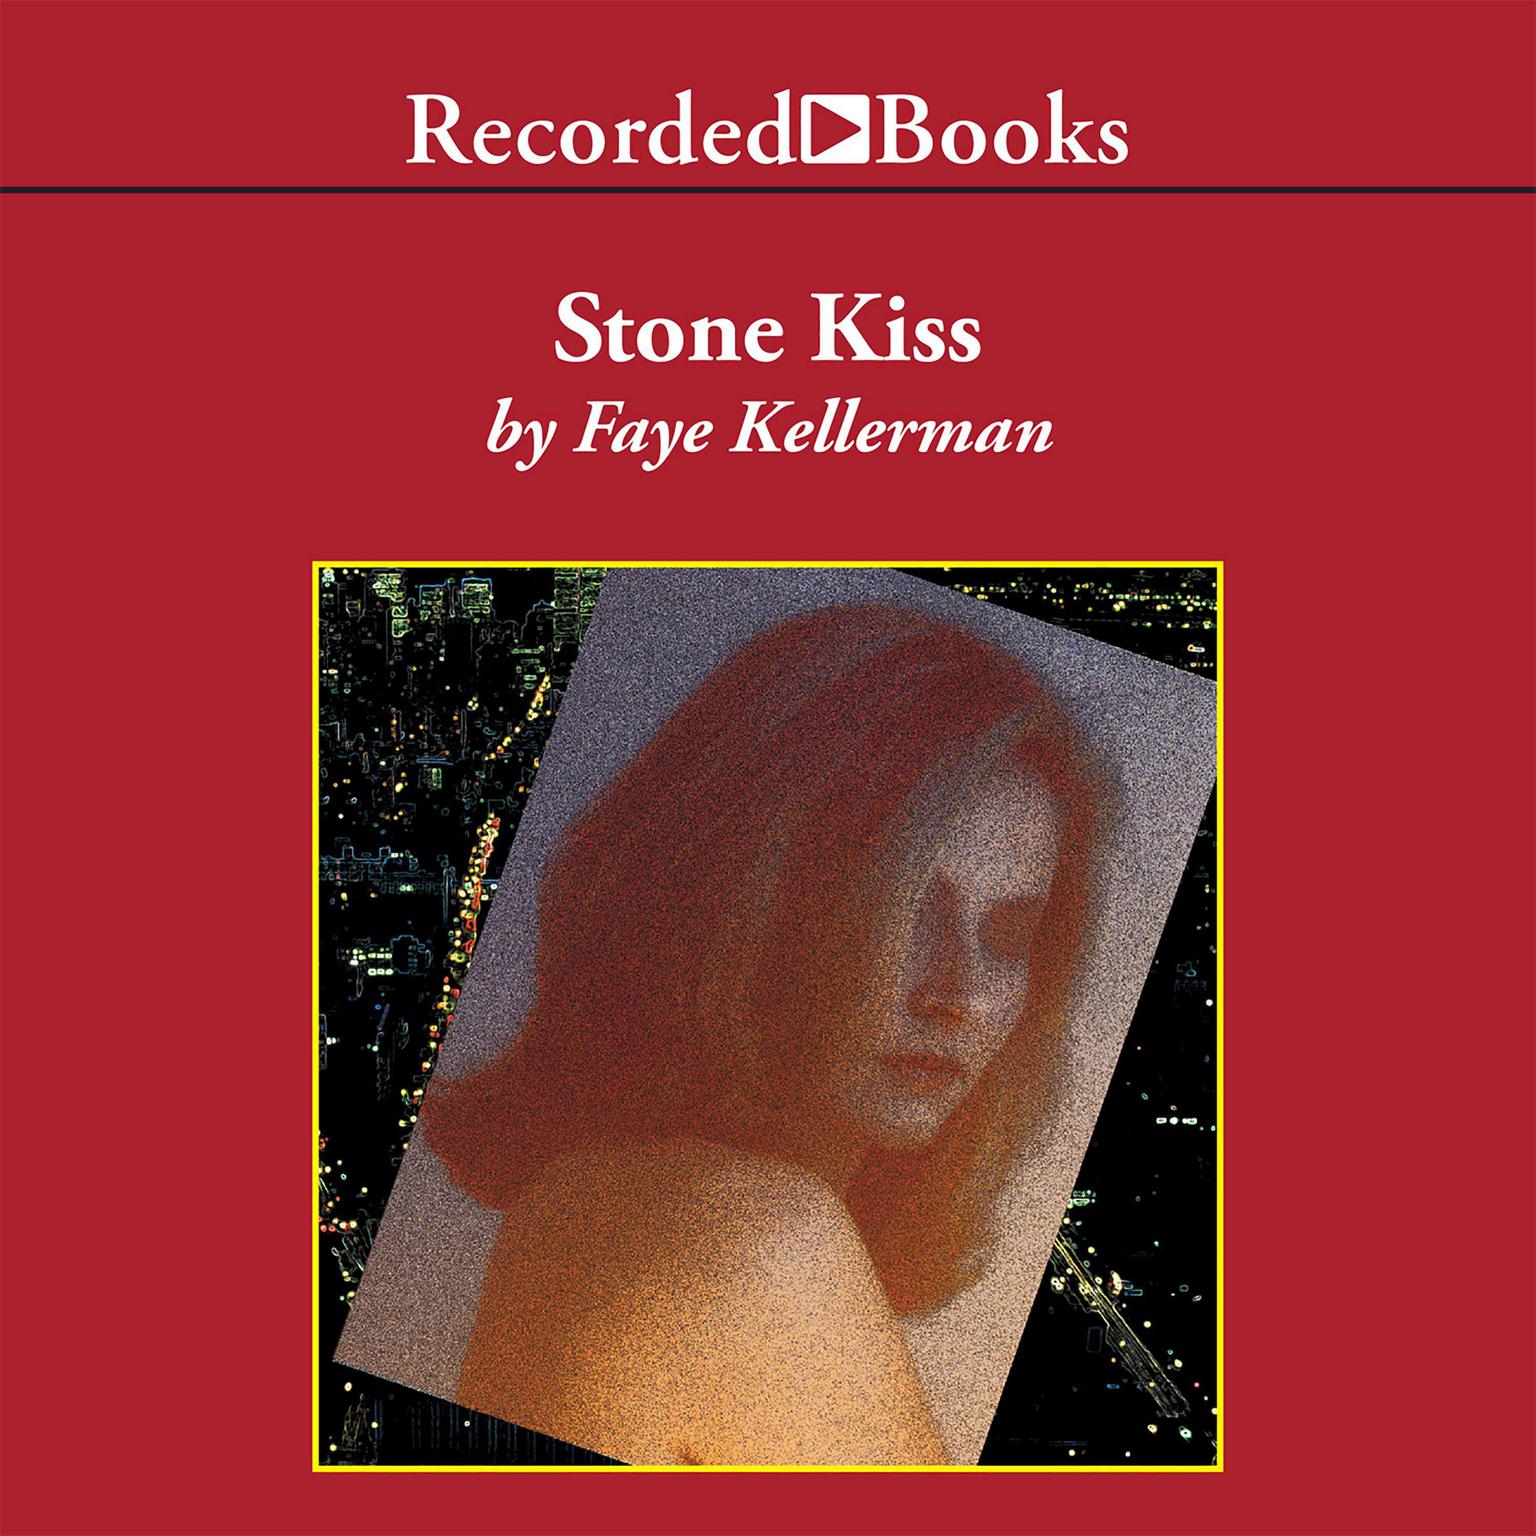 Stone Kiss Audiobook, by Faye Kellerman